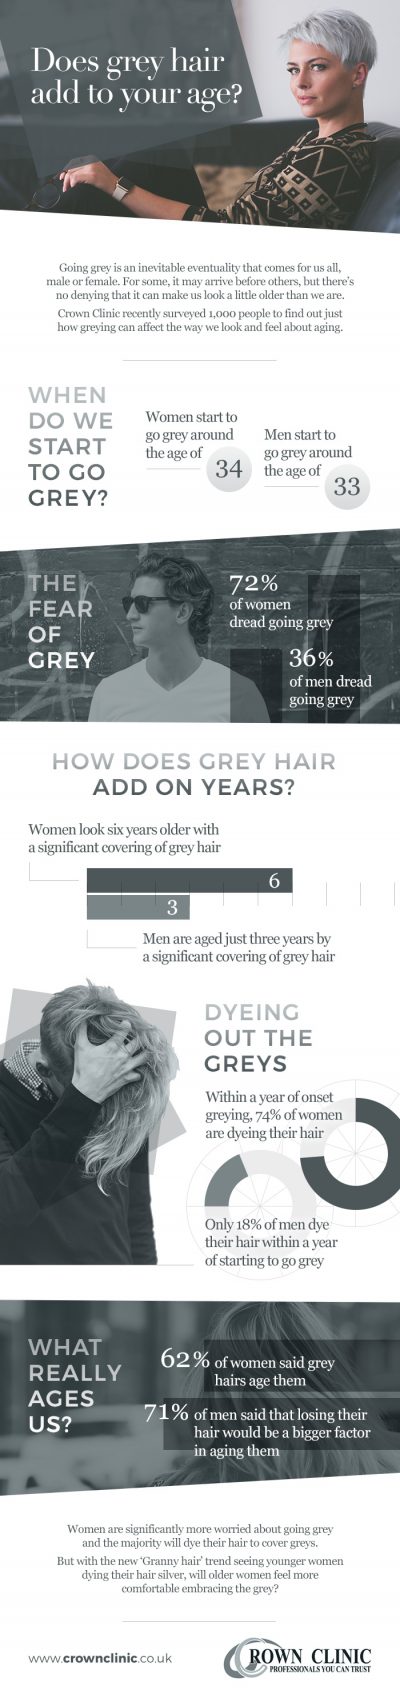 Grey Hair Infographic